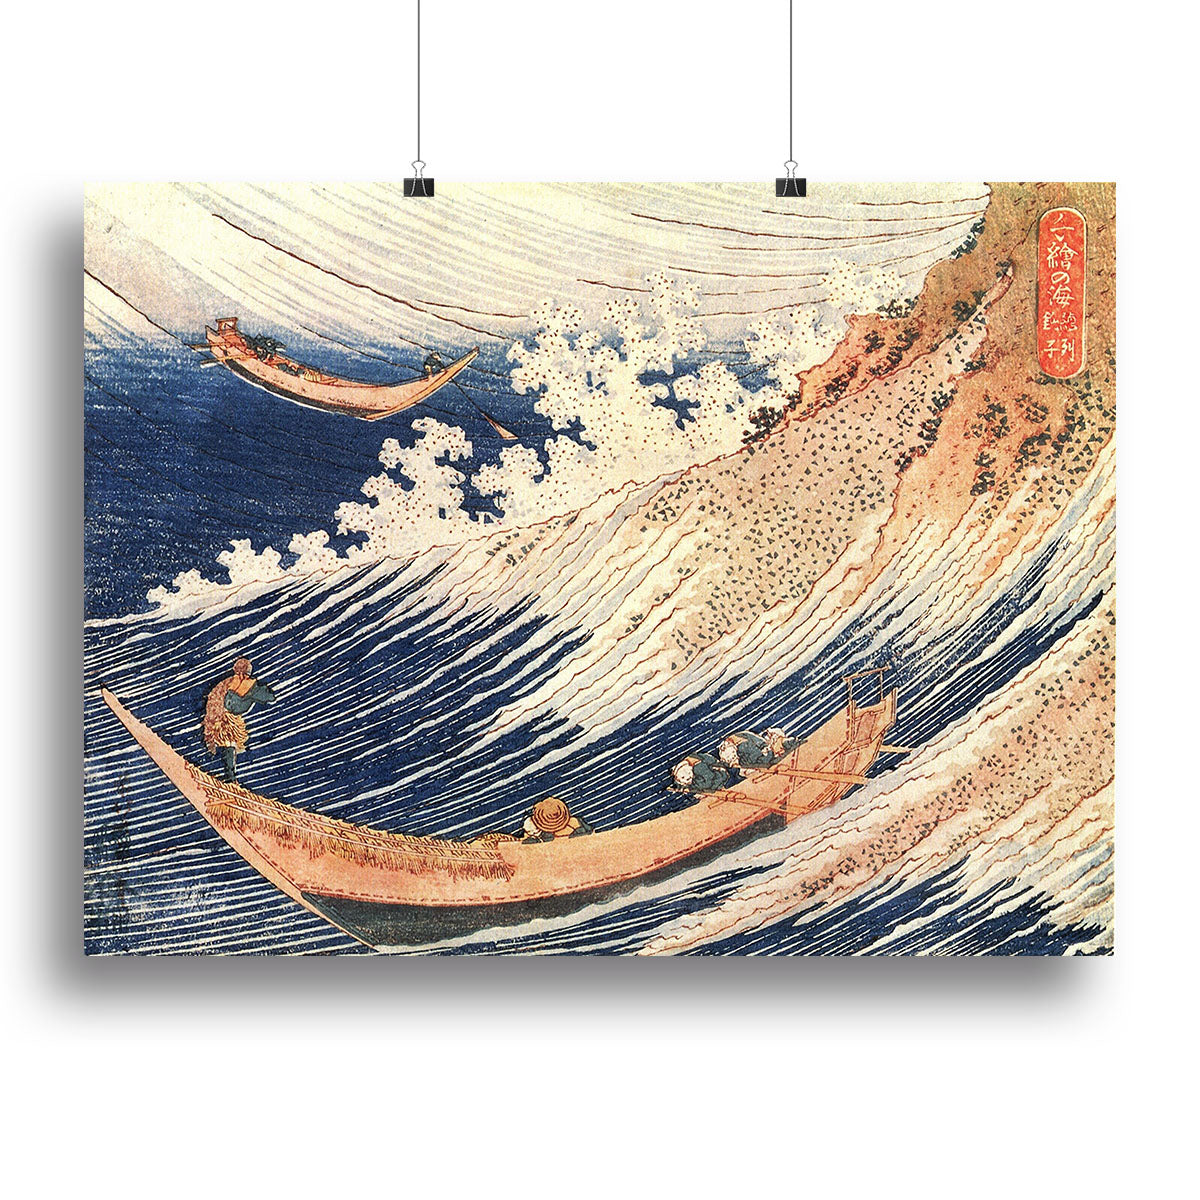 A Wild Sea at Choshi by Hokusai Canvas Print or Poster - Canvas Art Rocks - 2